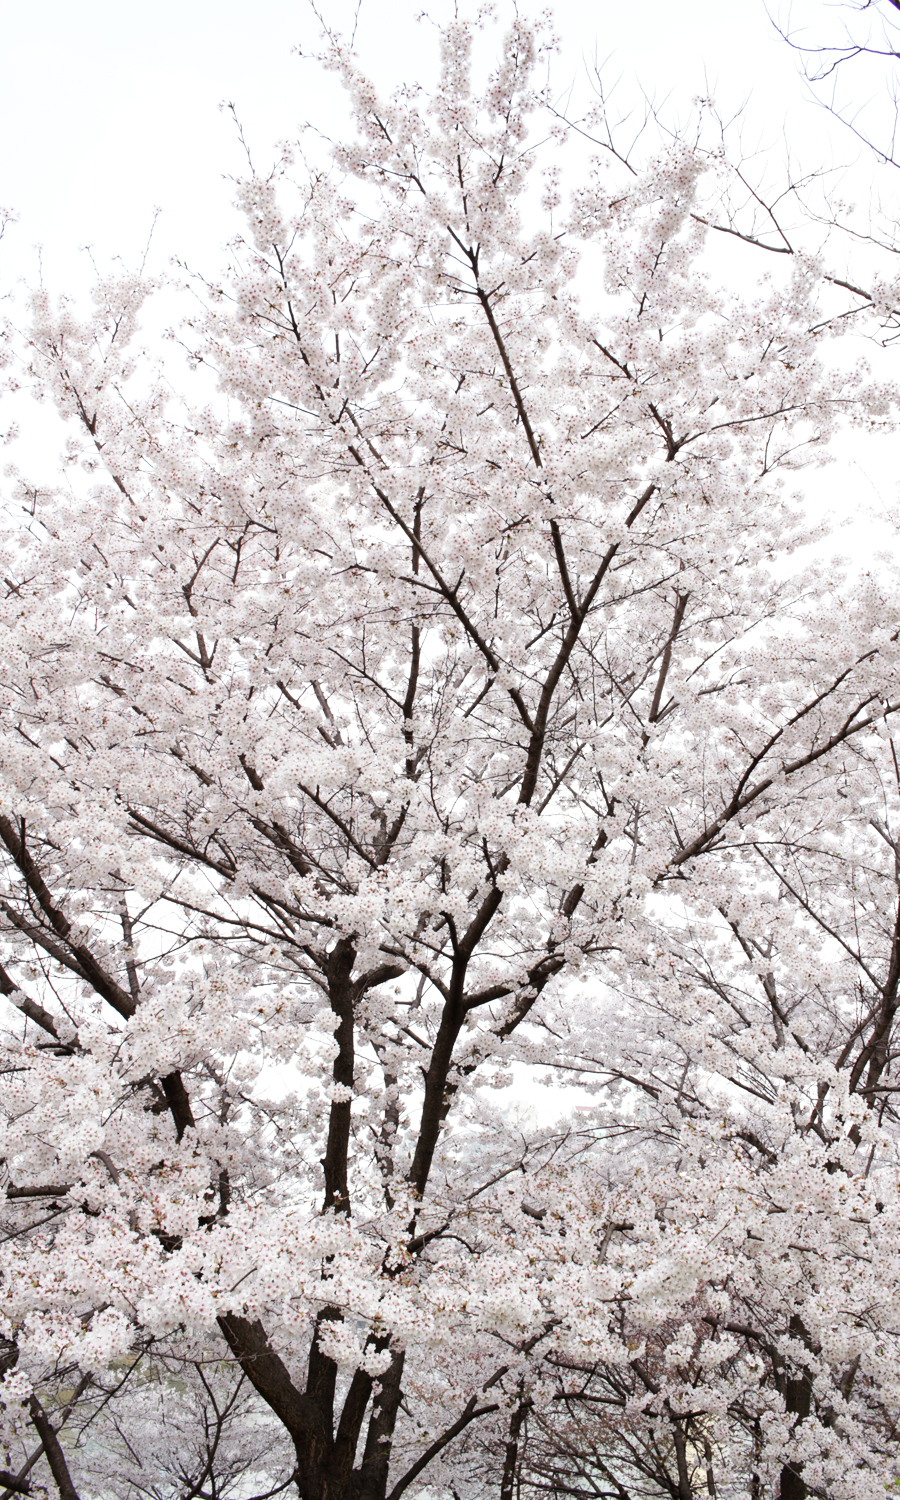 2015-04-09-korea-seoul-jamshil-seokchon-lake-cherry-blossoms-12